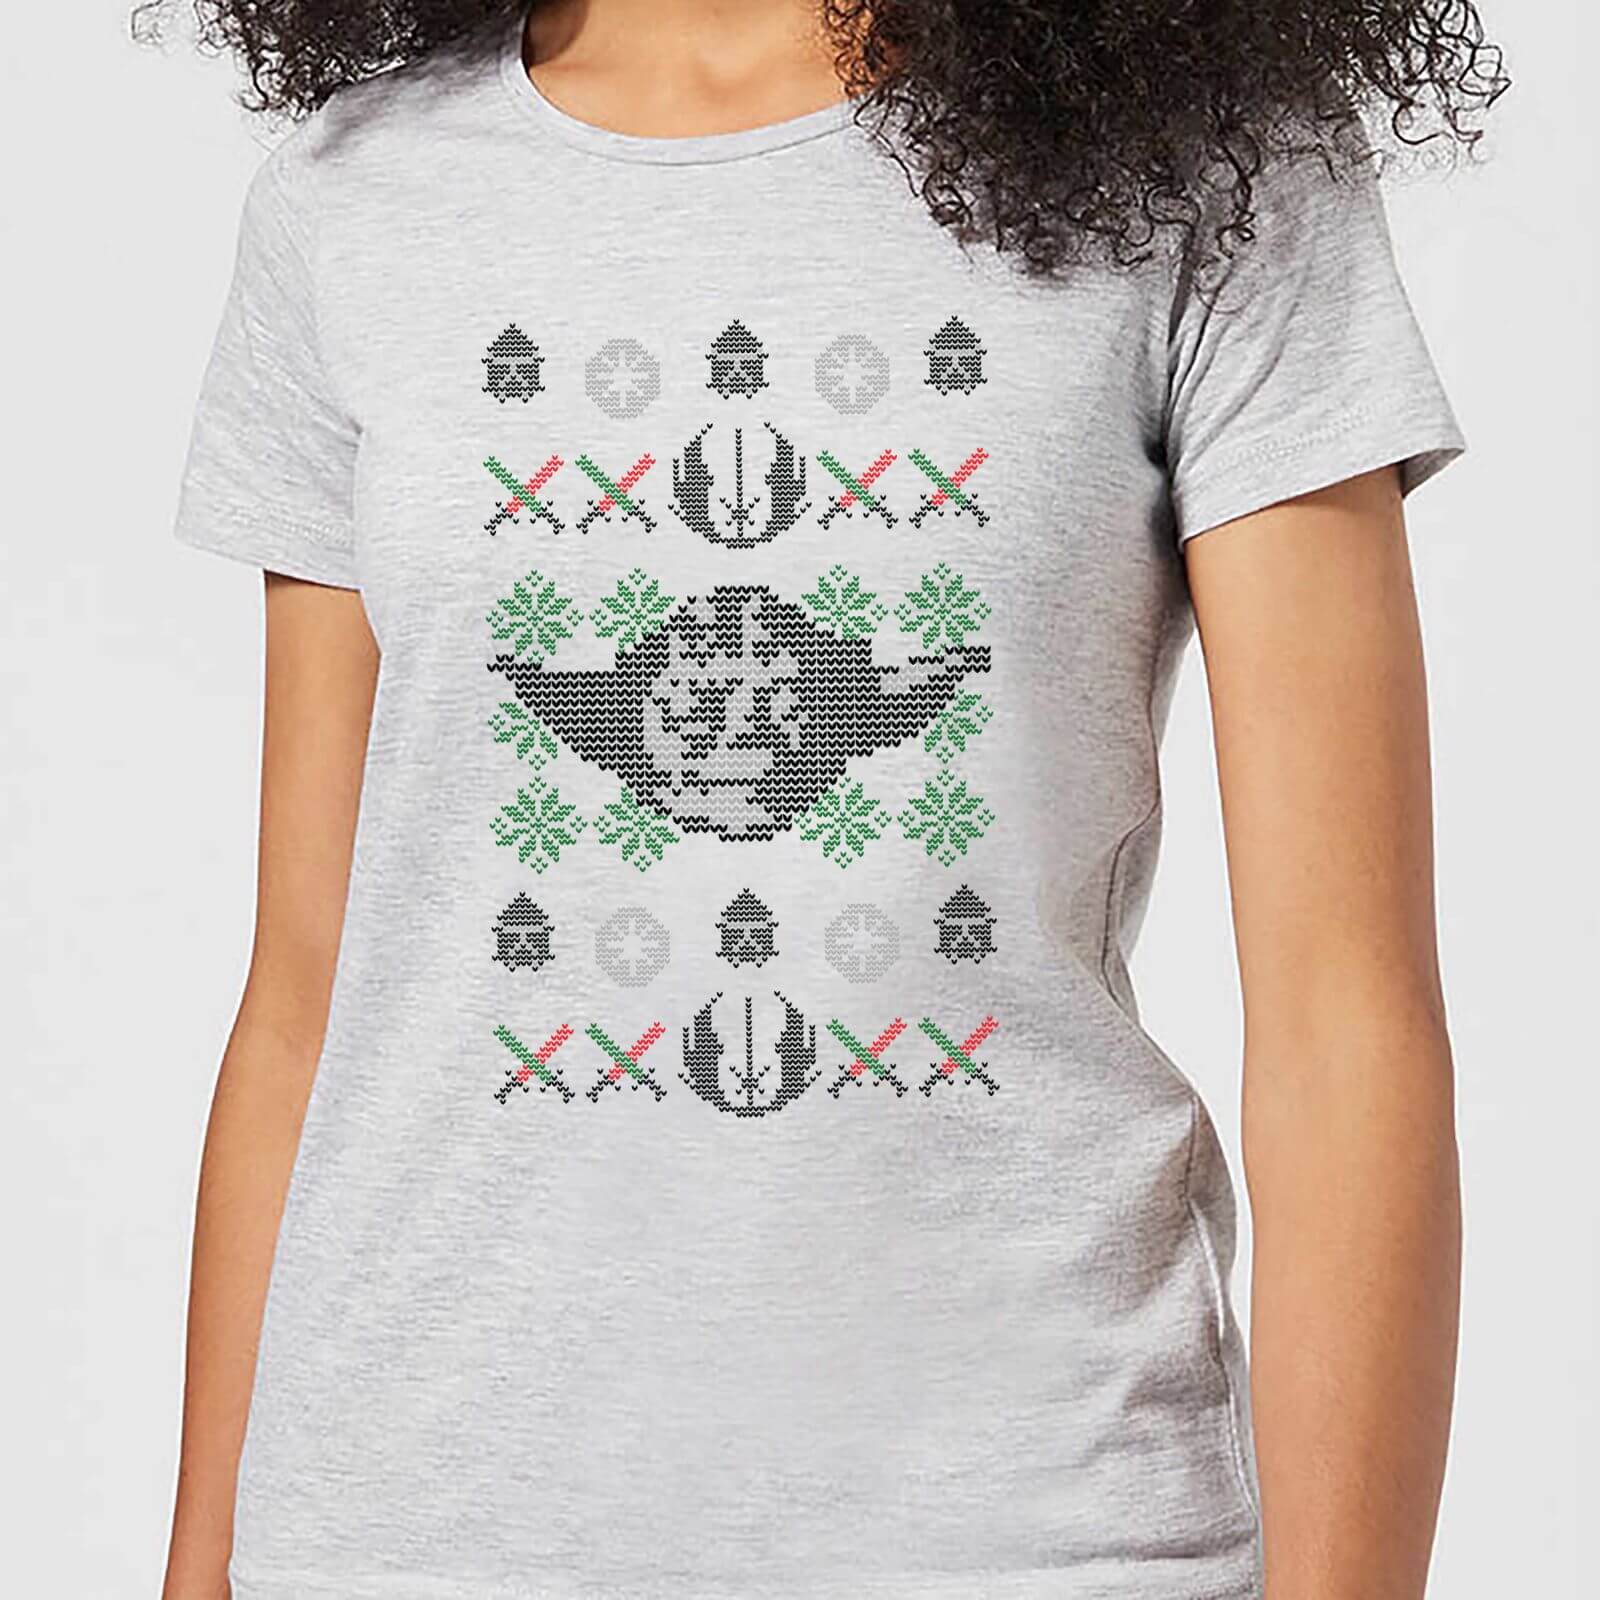 Star Wars Yoda Face Knit Women's Christmas T-Shirt - Grey - M - Grey